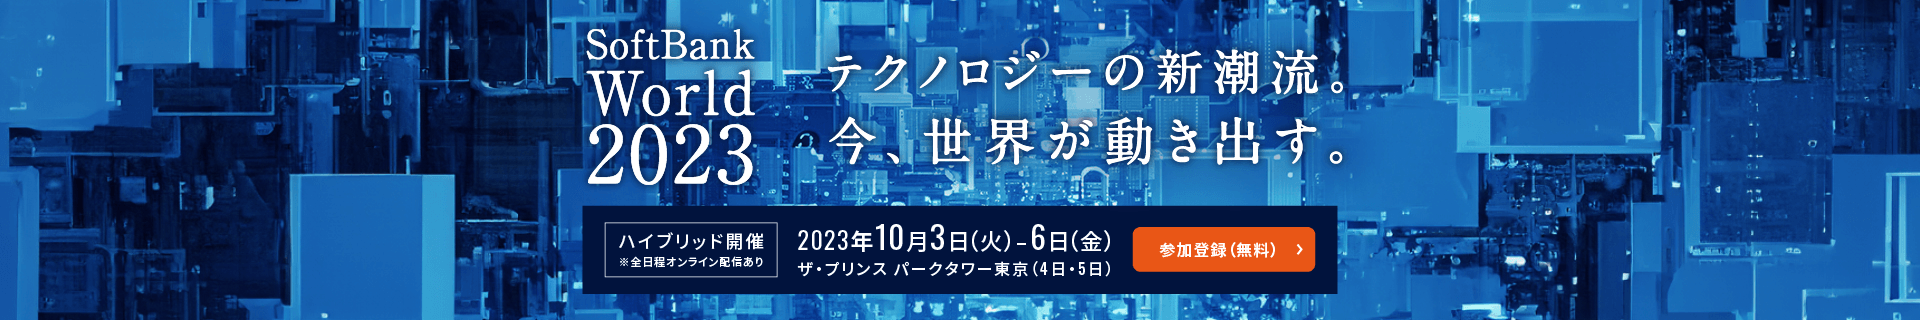 SoftBank World 2023